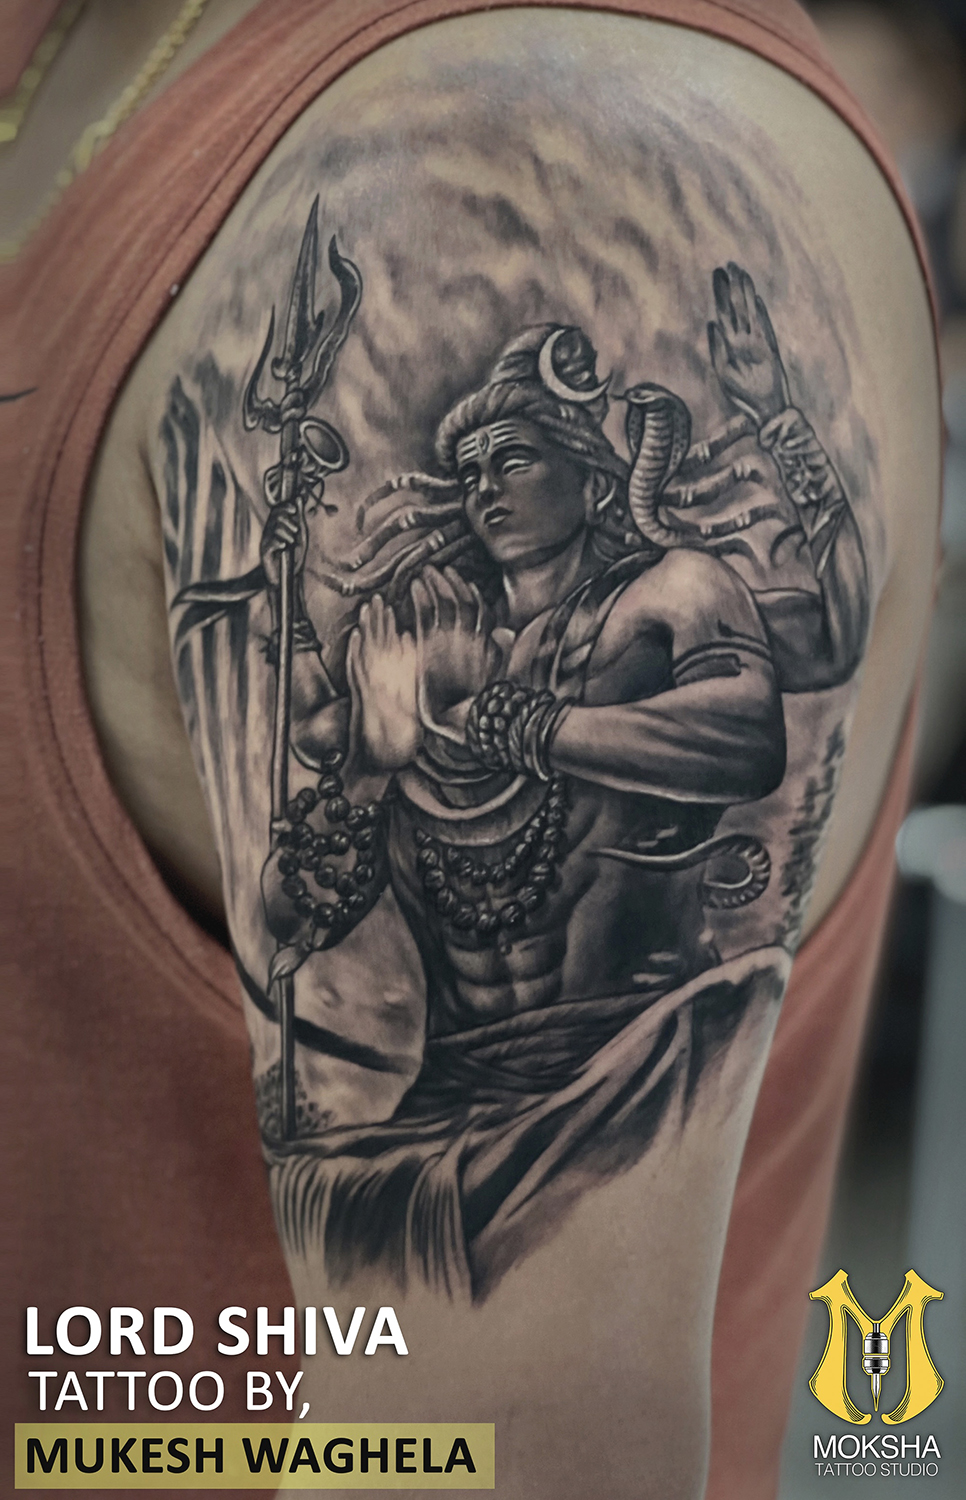 Lord shiva angry mode tattoo design - YouTube